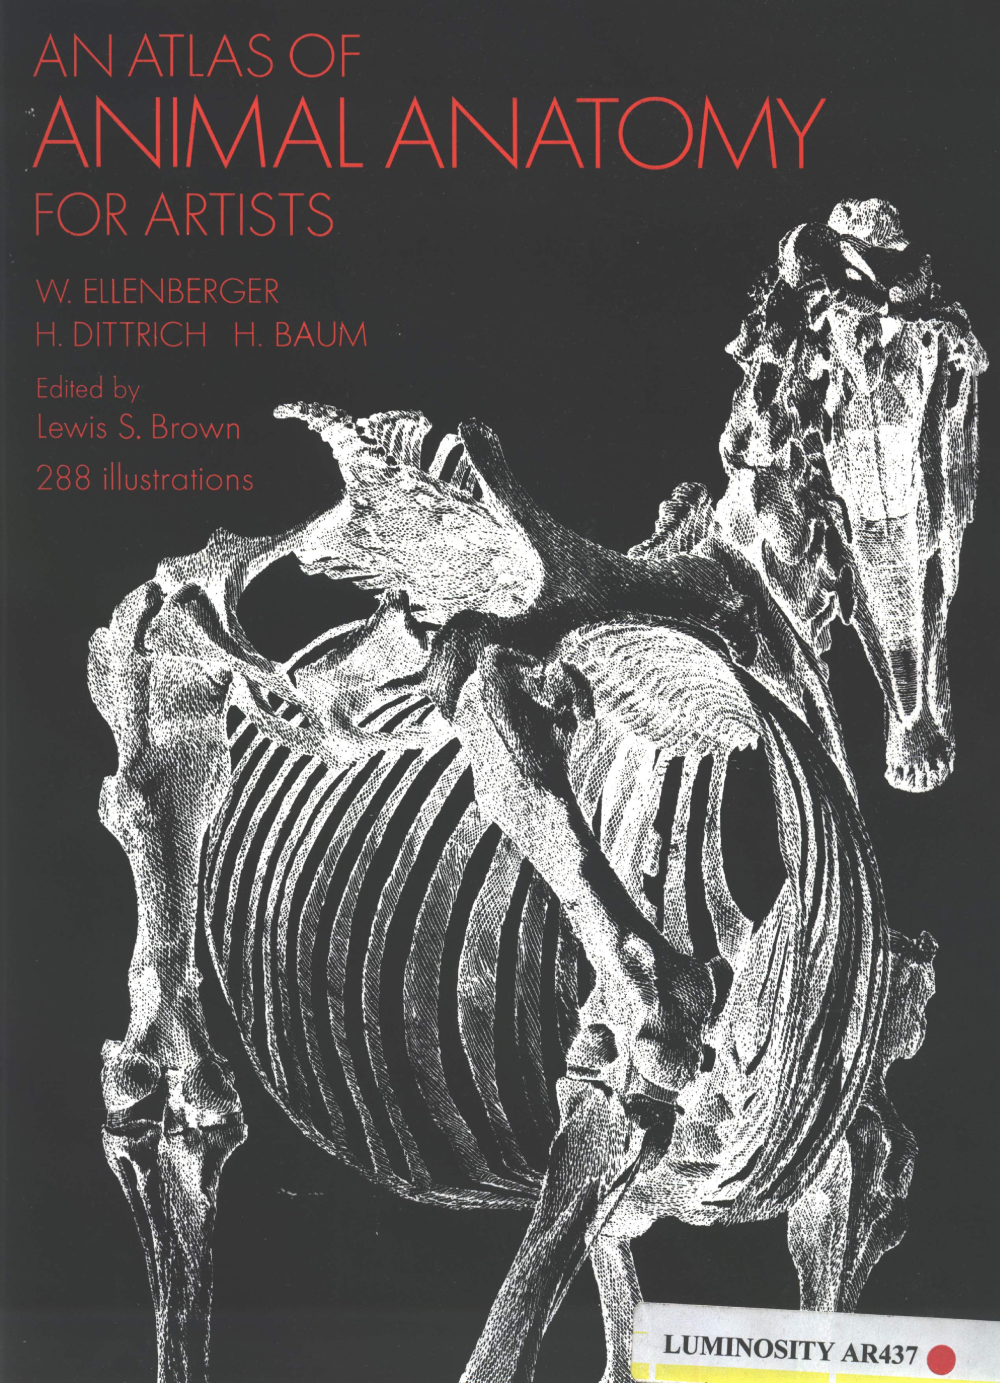 An Atlas of animal anatomy for artists - pdf Docer.com.ar